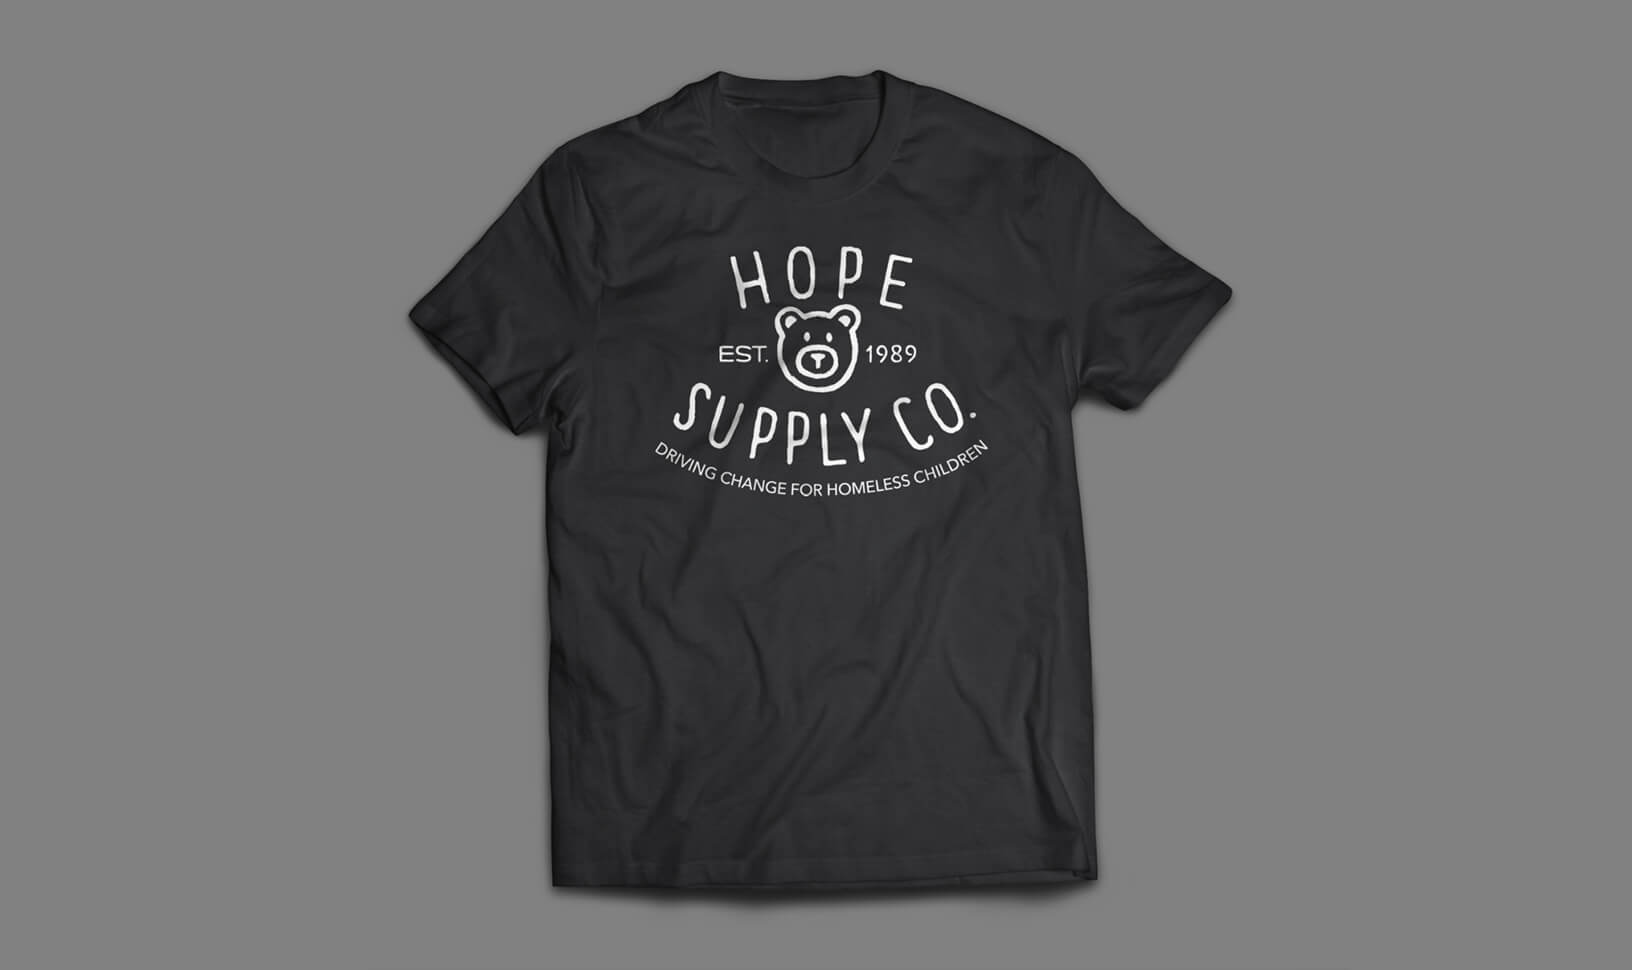 Hope Supply Co.